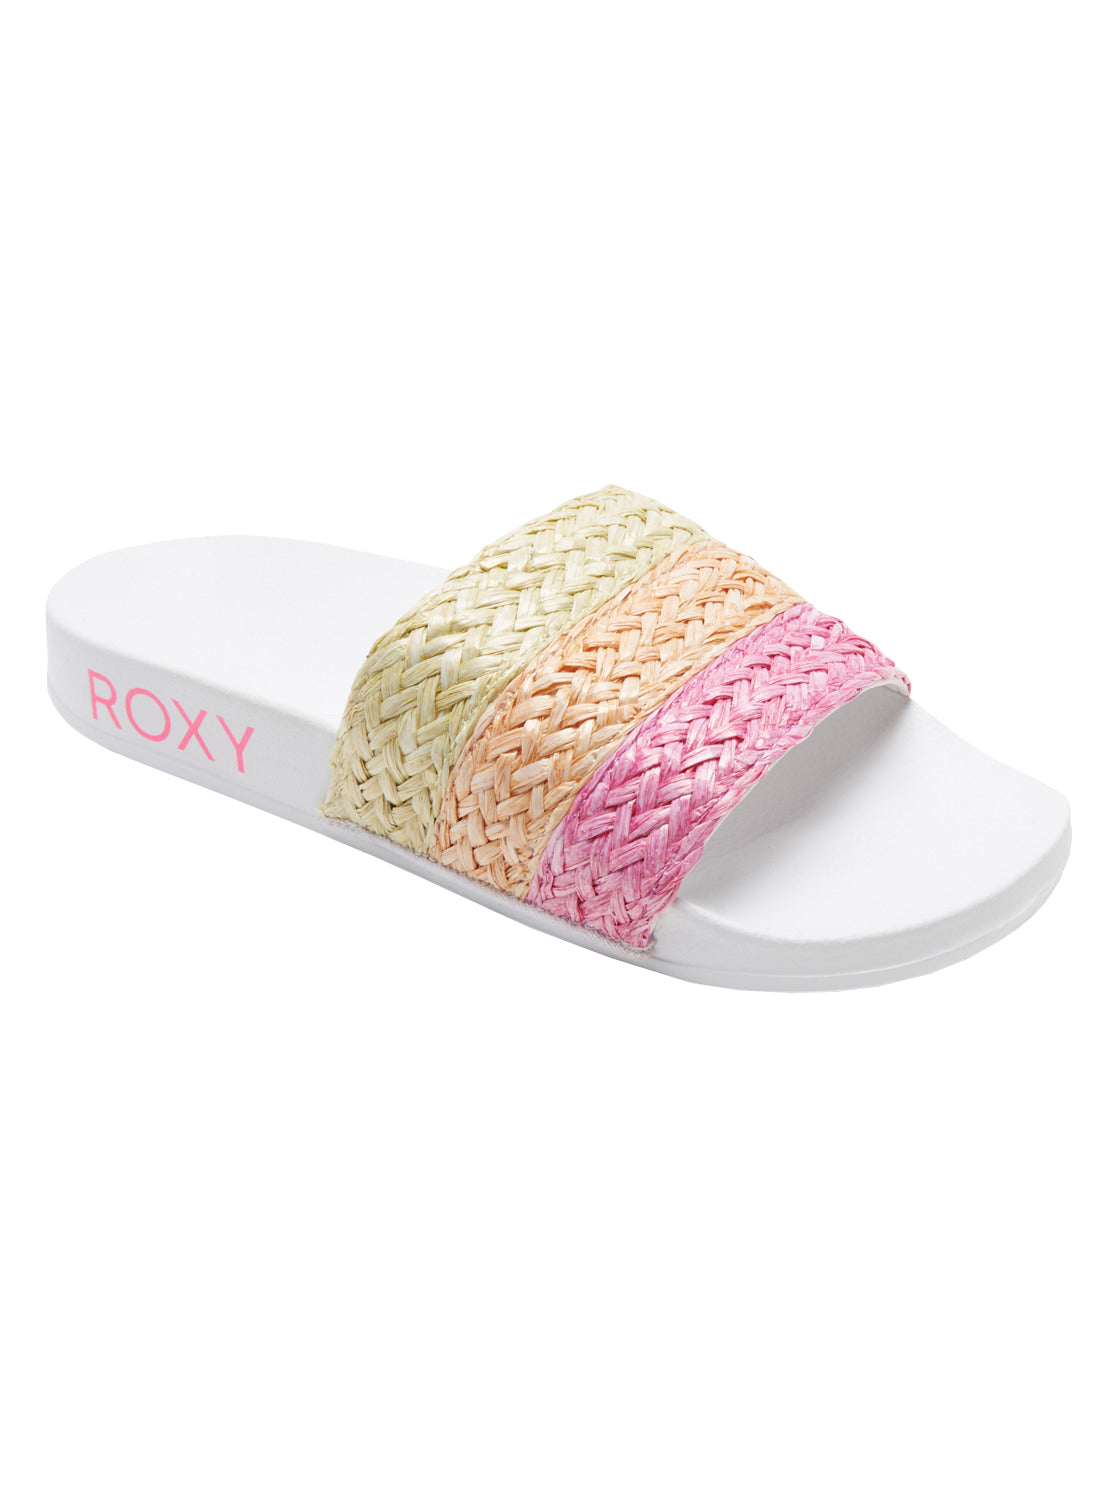 Roxy Slippy Jute Womens Sandal TPO-White-Crazy Pink-Orange 10